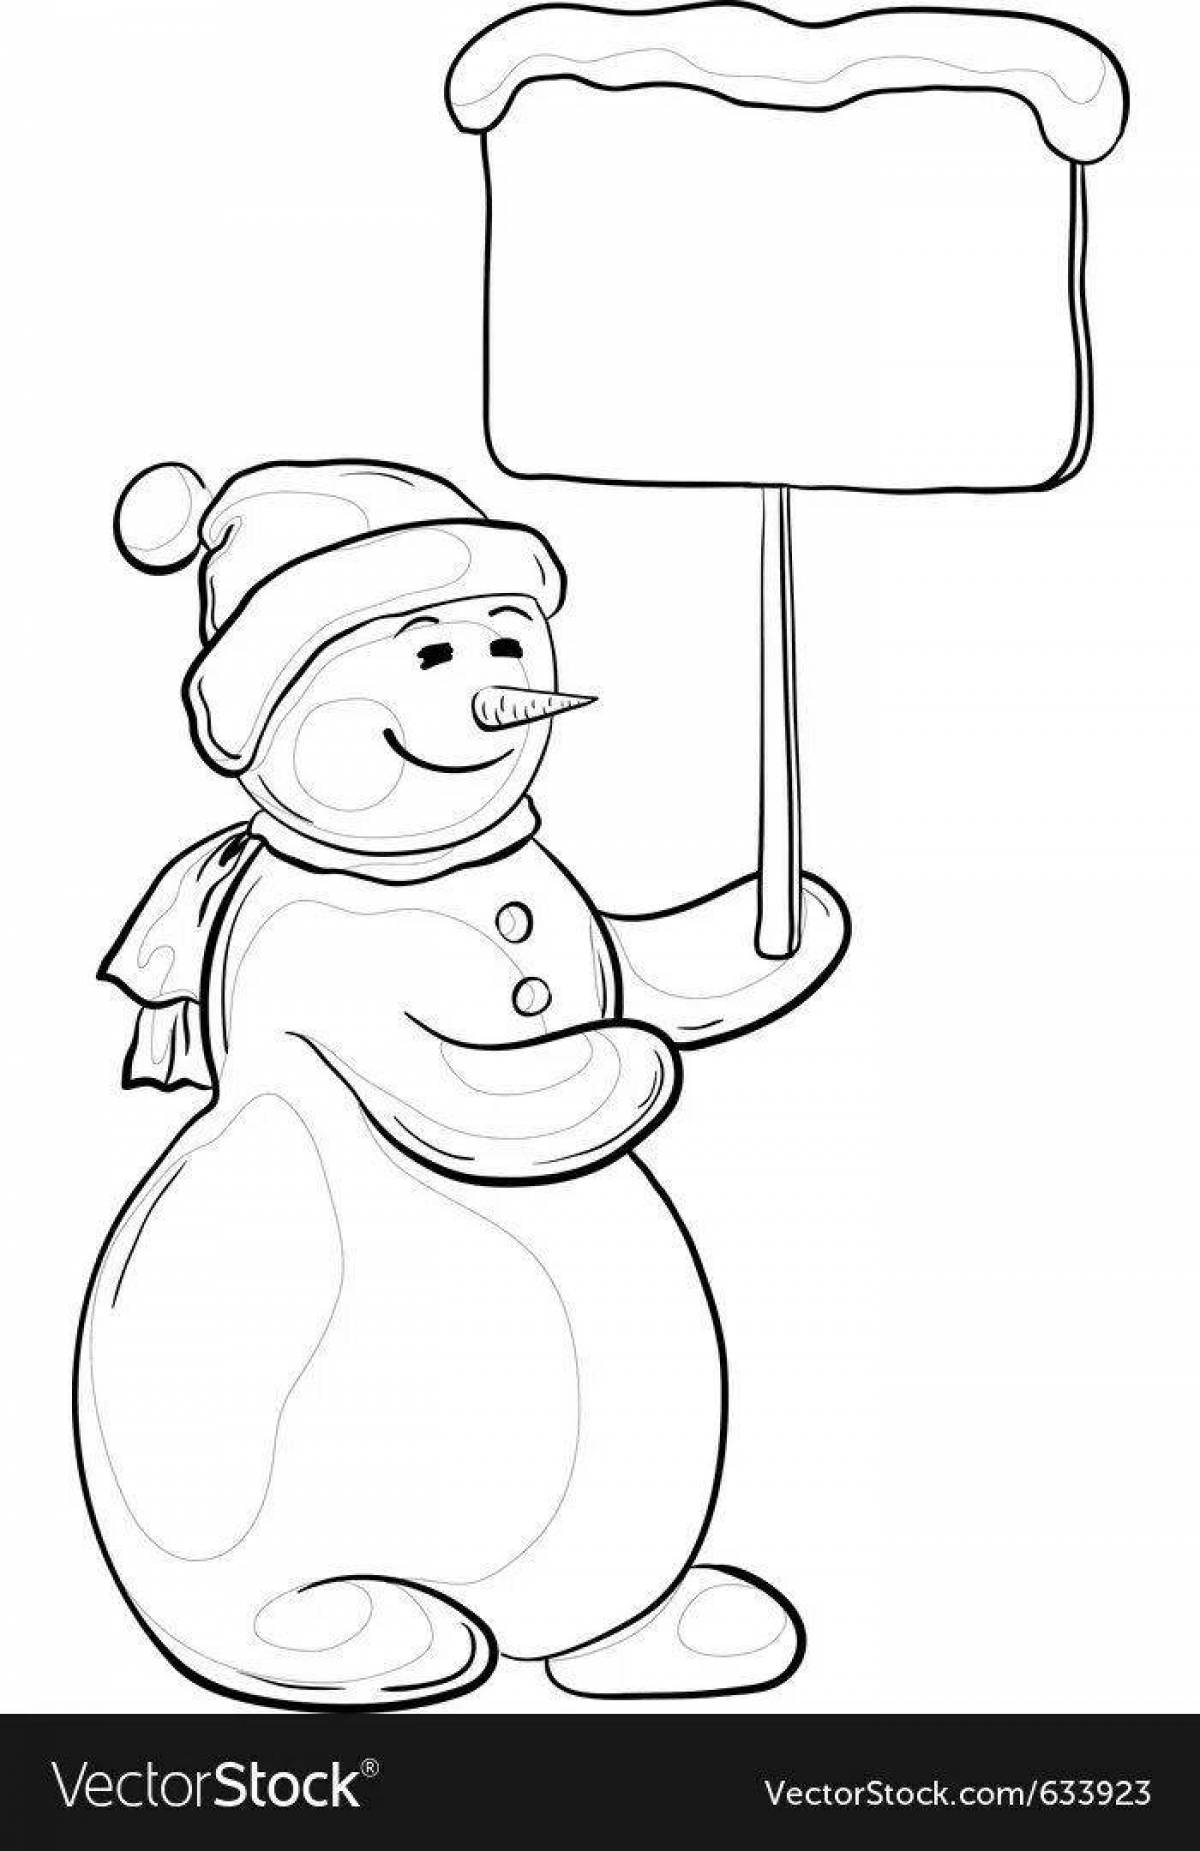 Luminous postman snowman coloring book